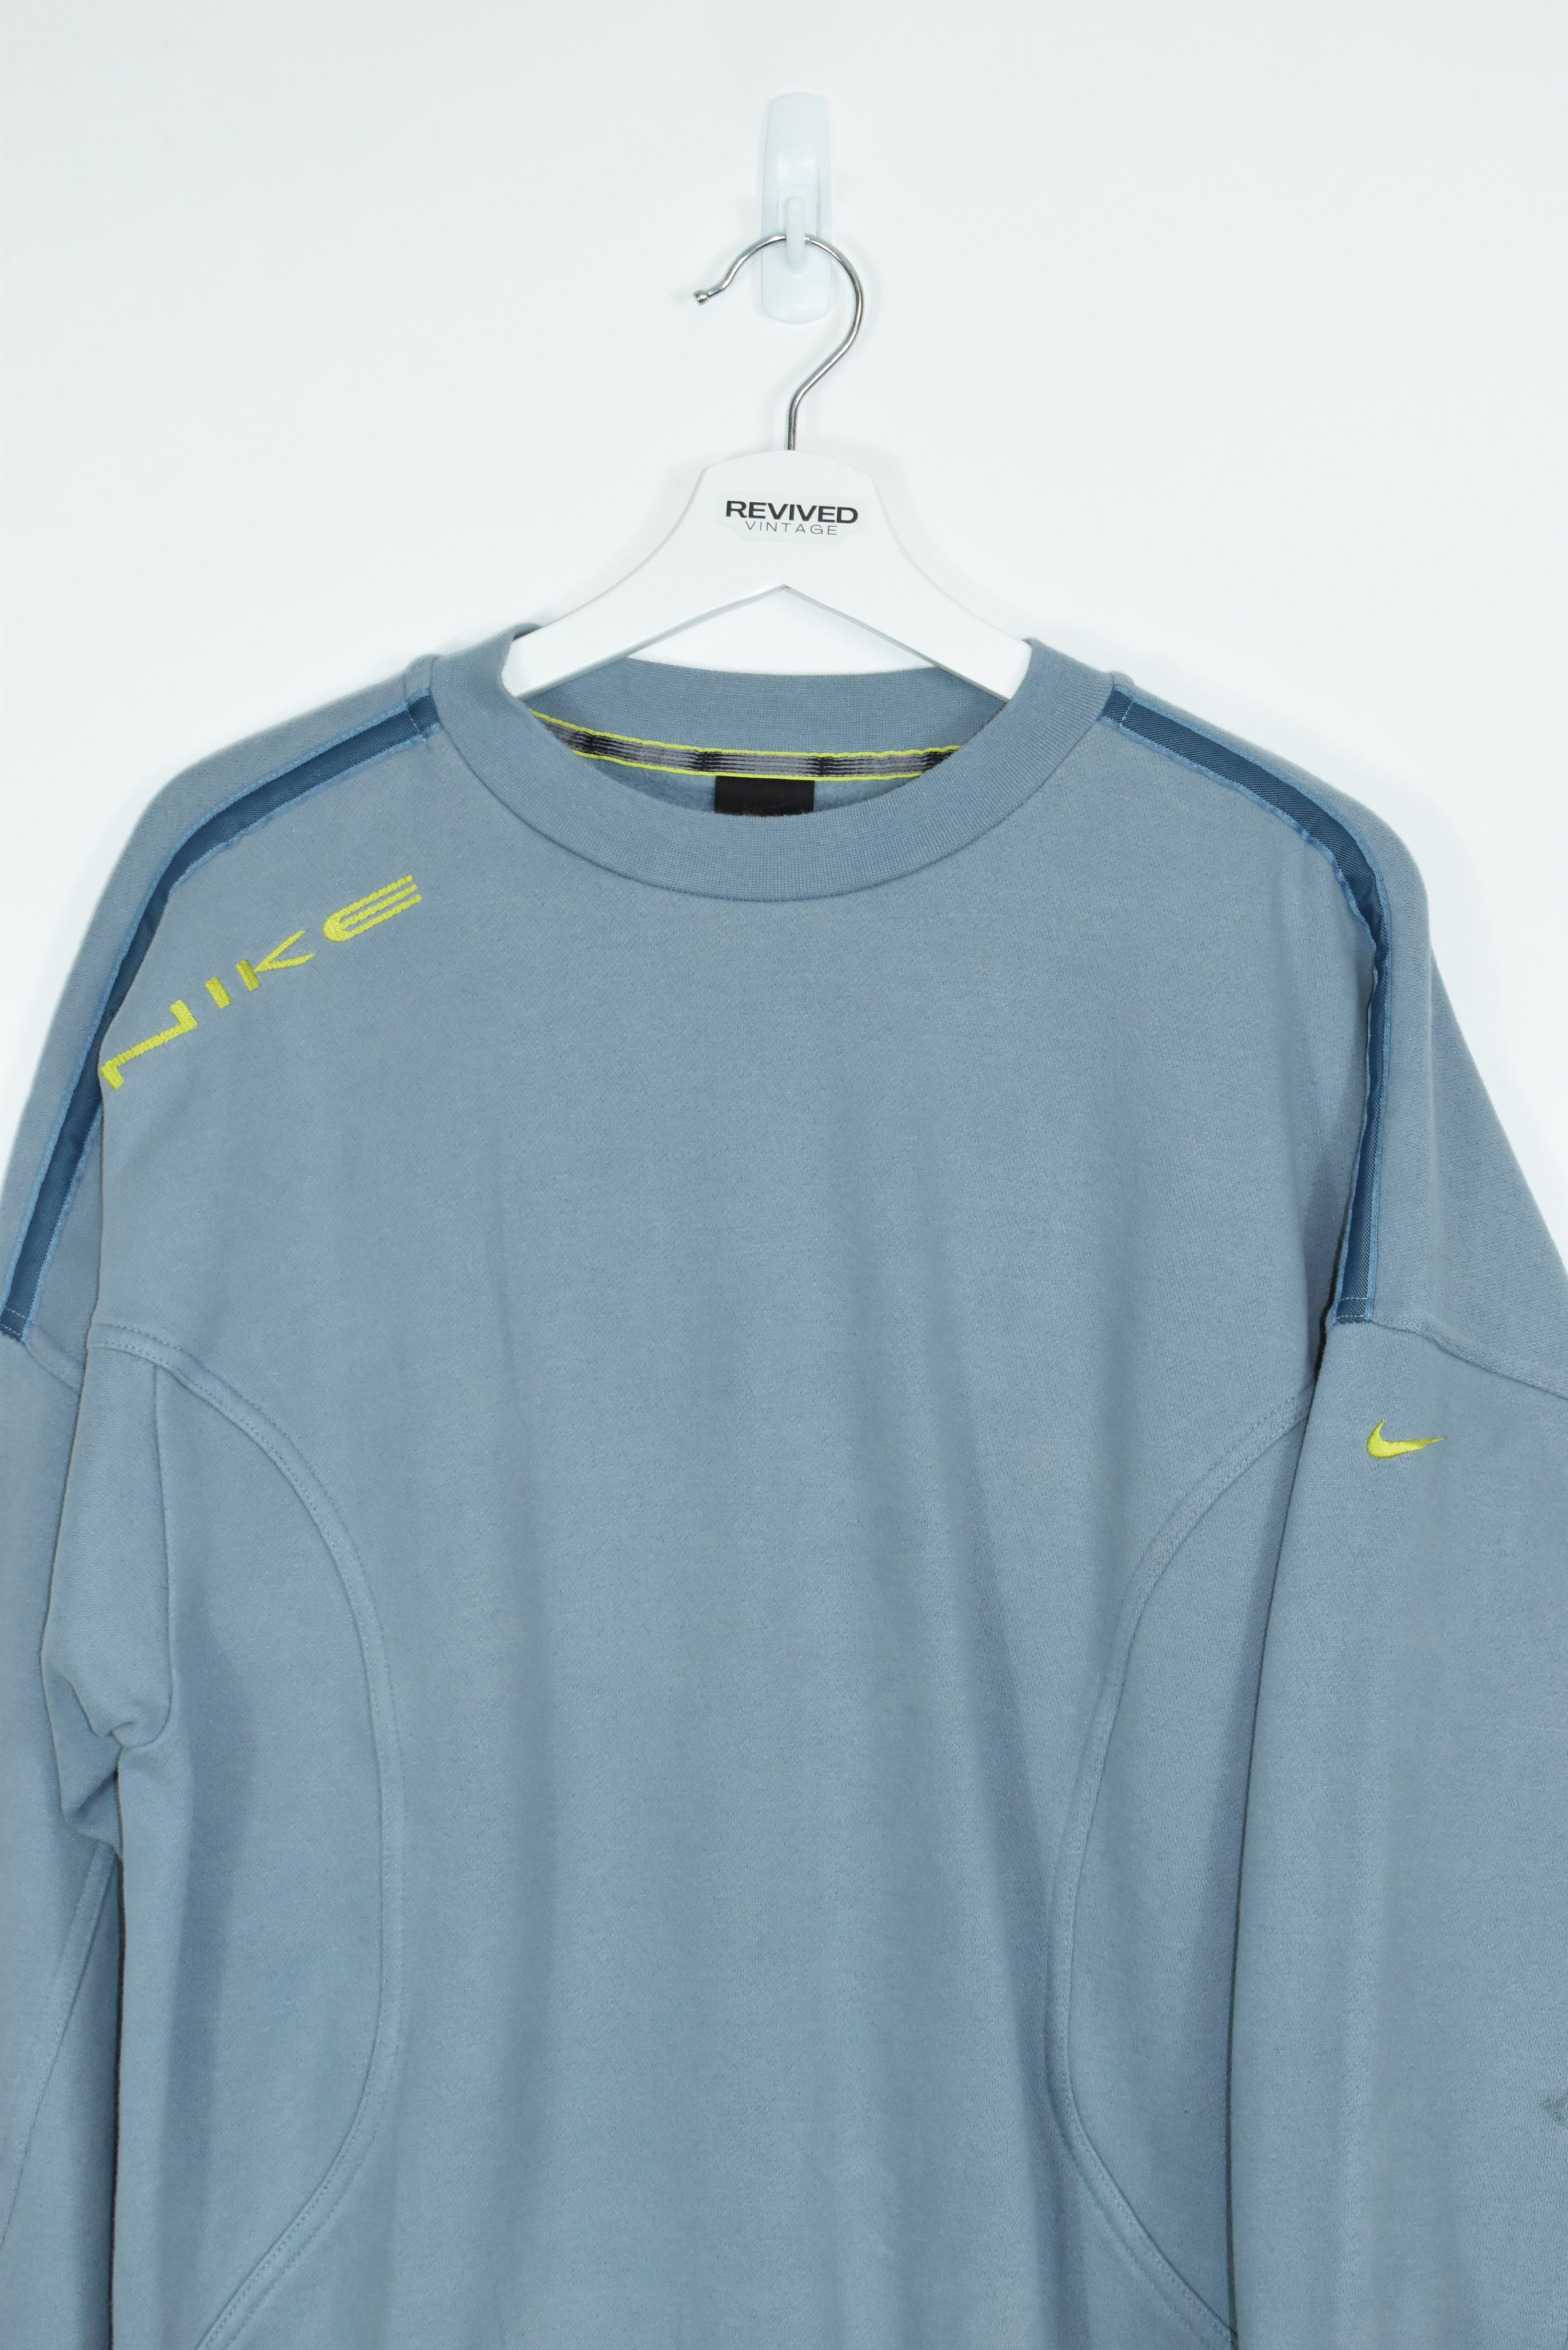 Vintage Nike Baby Blue Embroidery Sweatshirt Medium